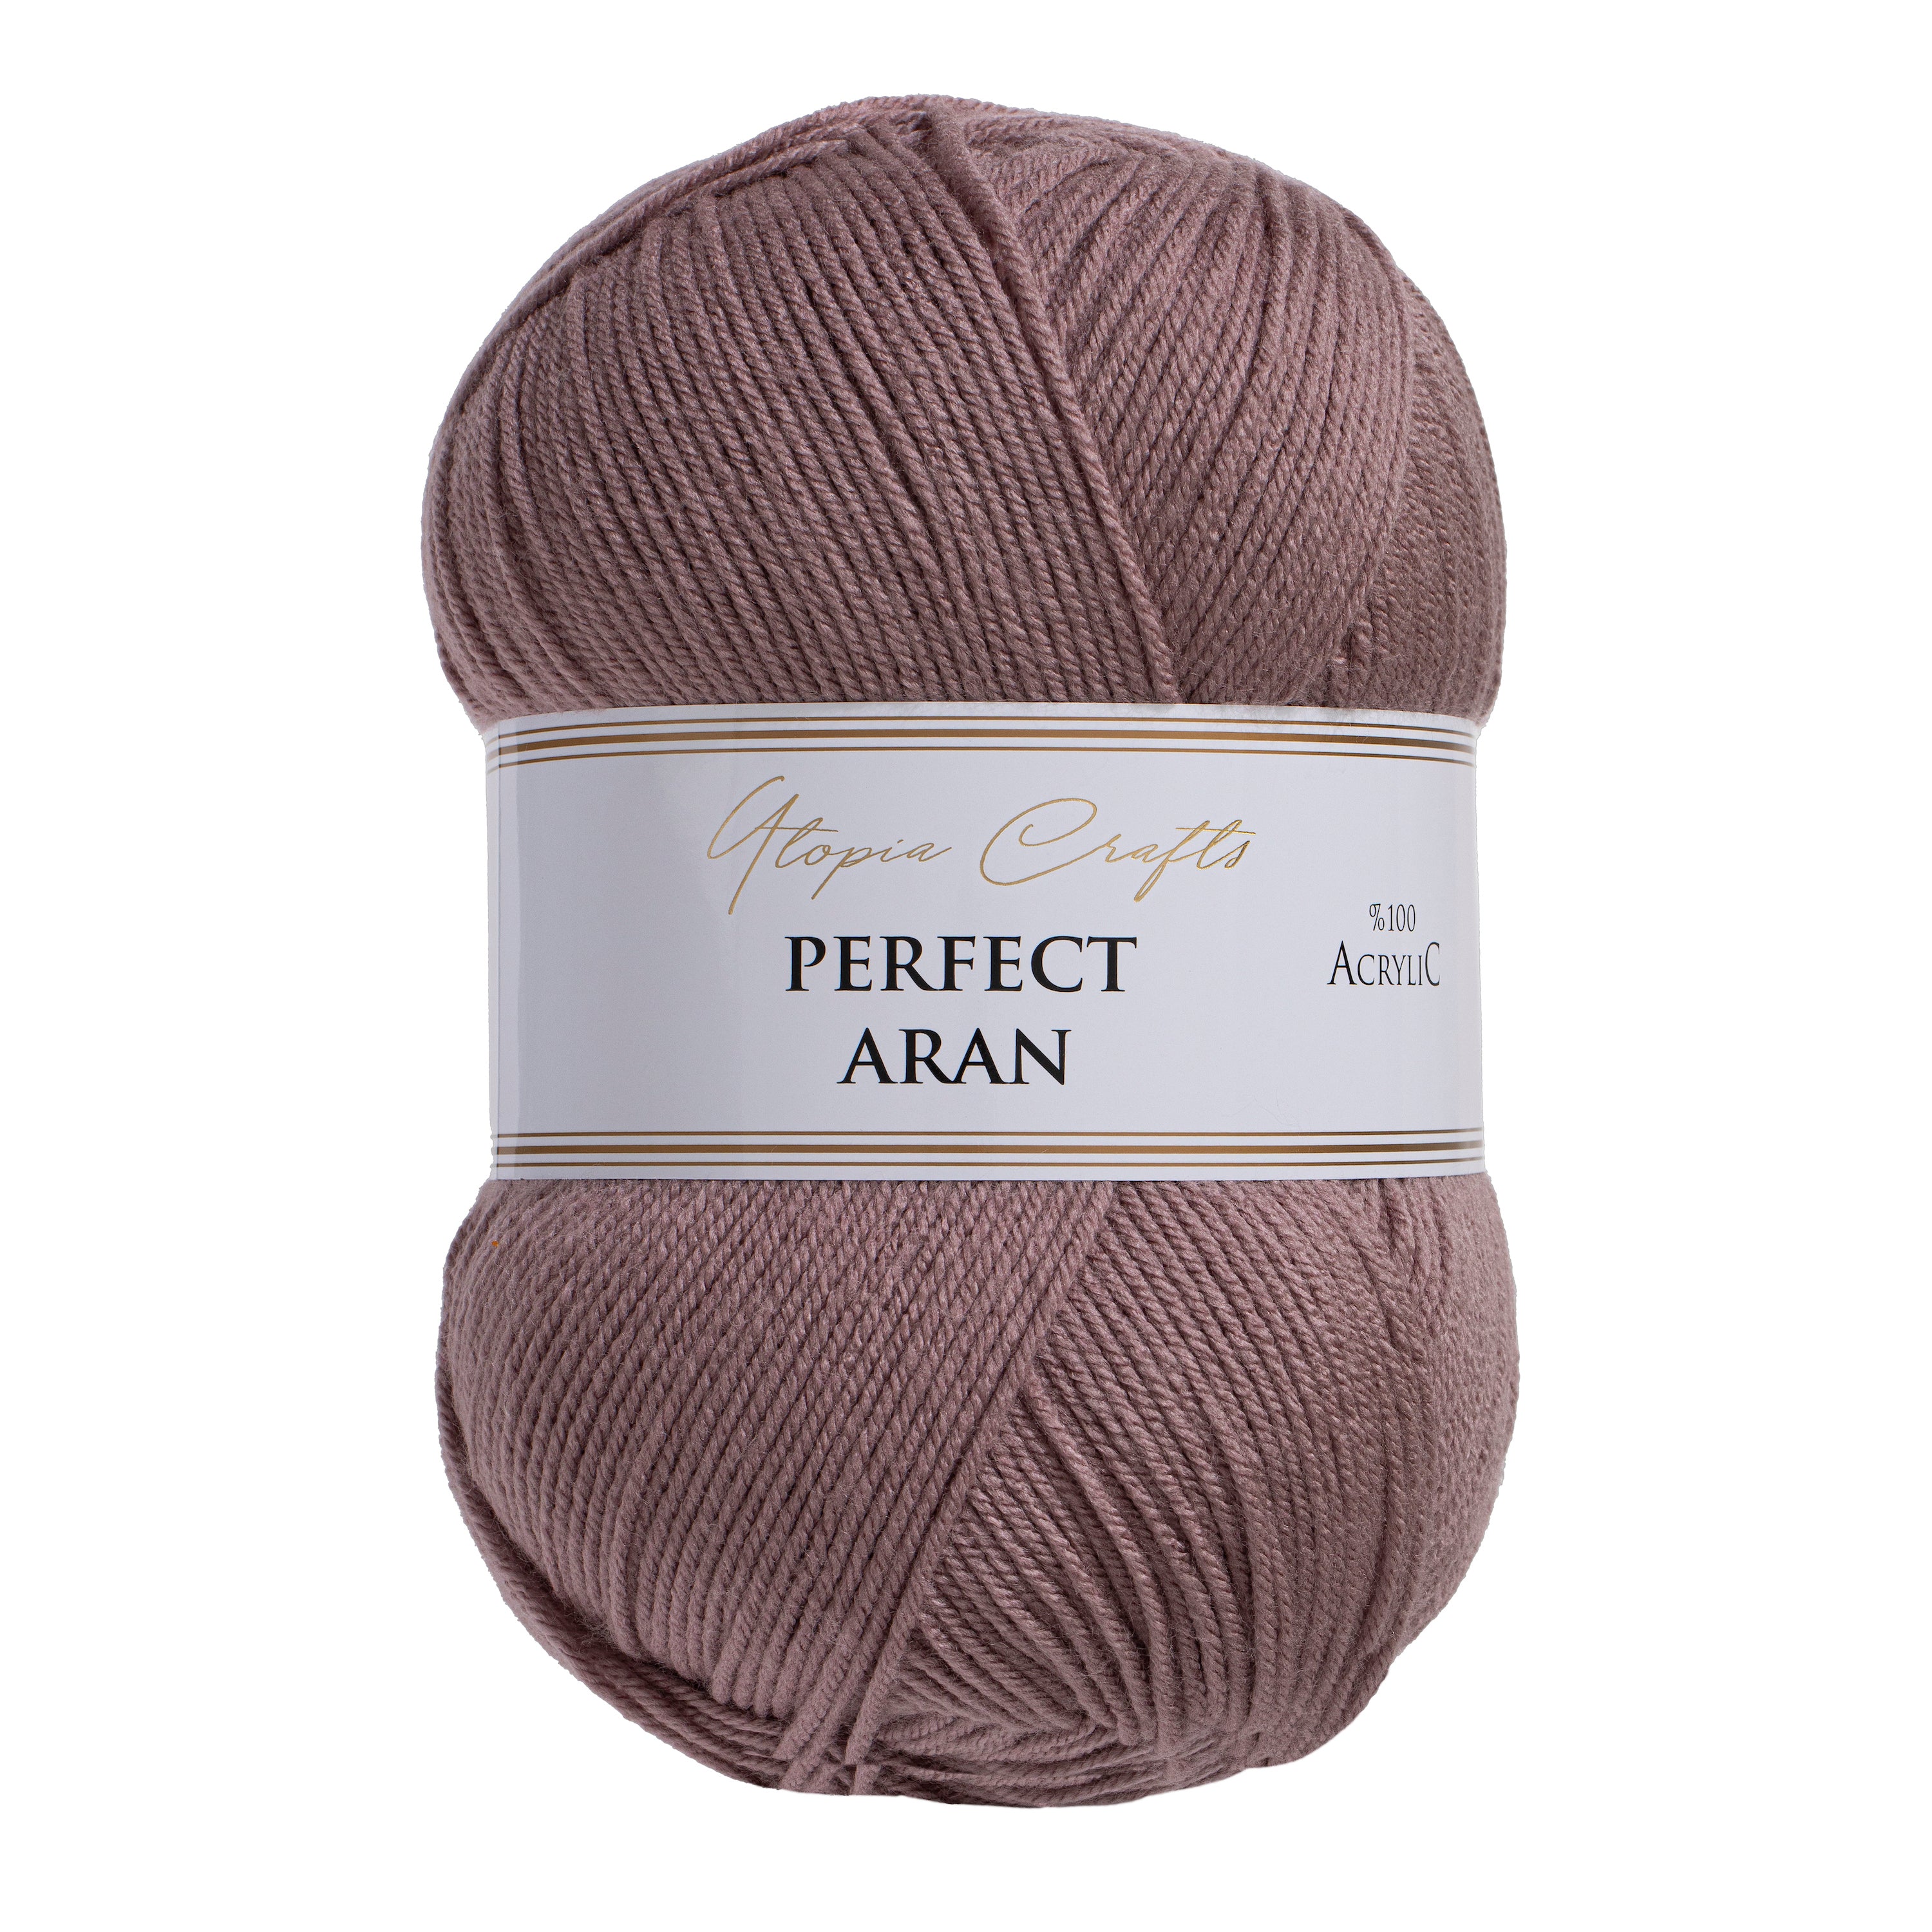 Utopia Crafts Aran Knitting and Crochet Yarn, 400g [Copper Rose]